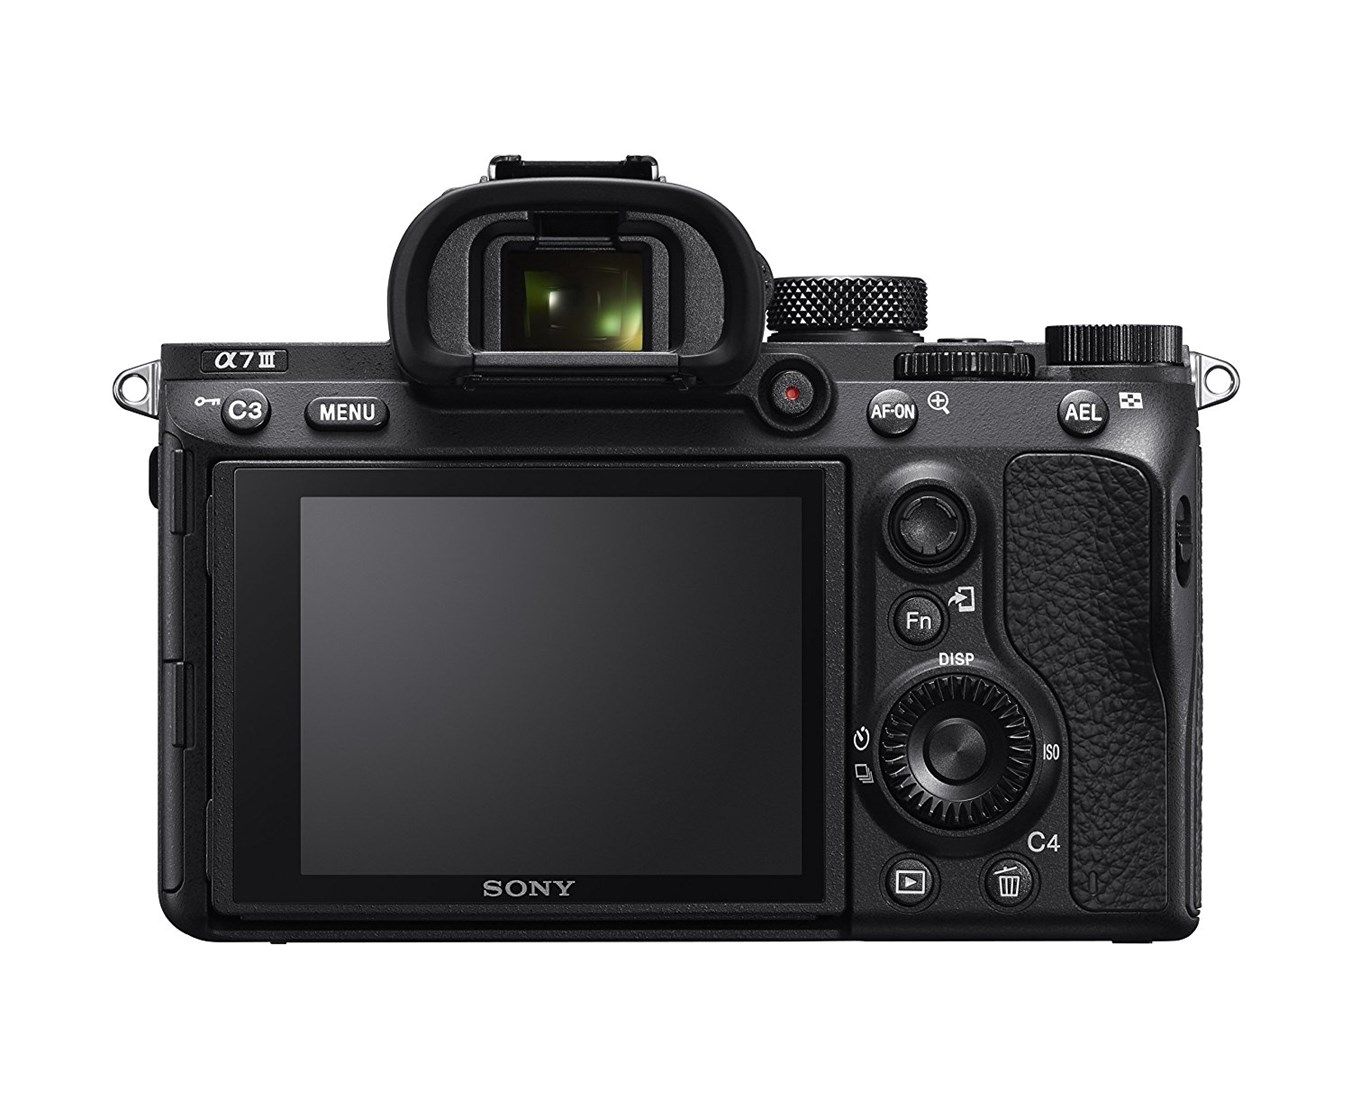 Sony Alpha a7 III Full Frame Mirrorless Digital Camera with 28-70mm Lens Kit